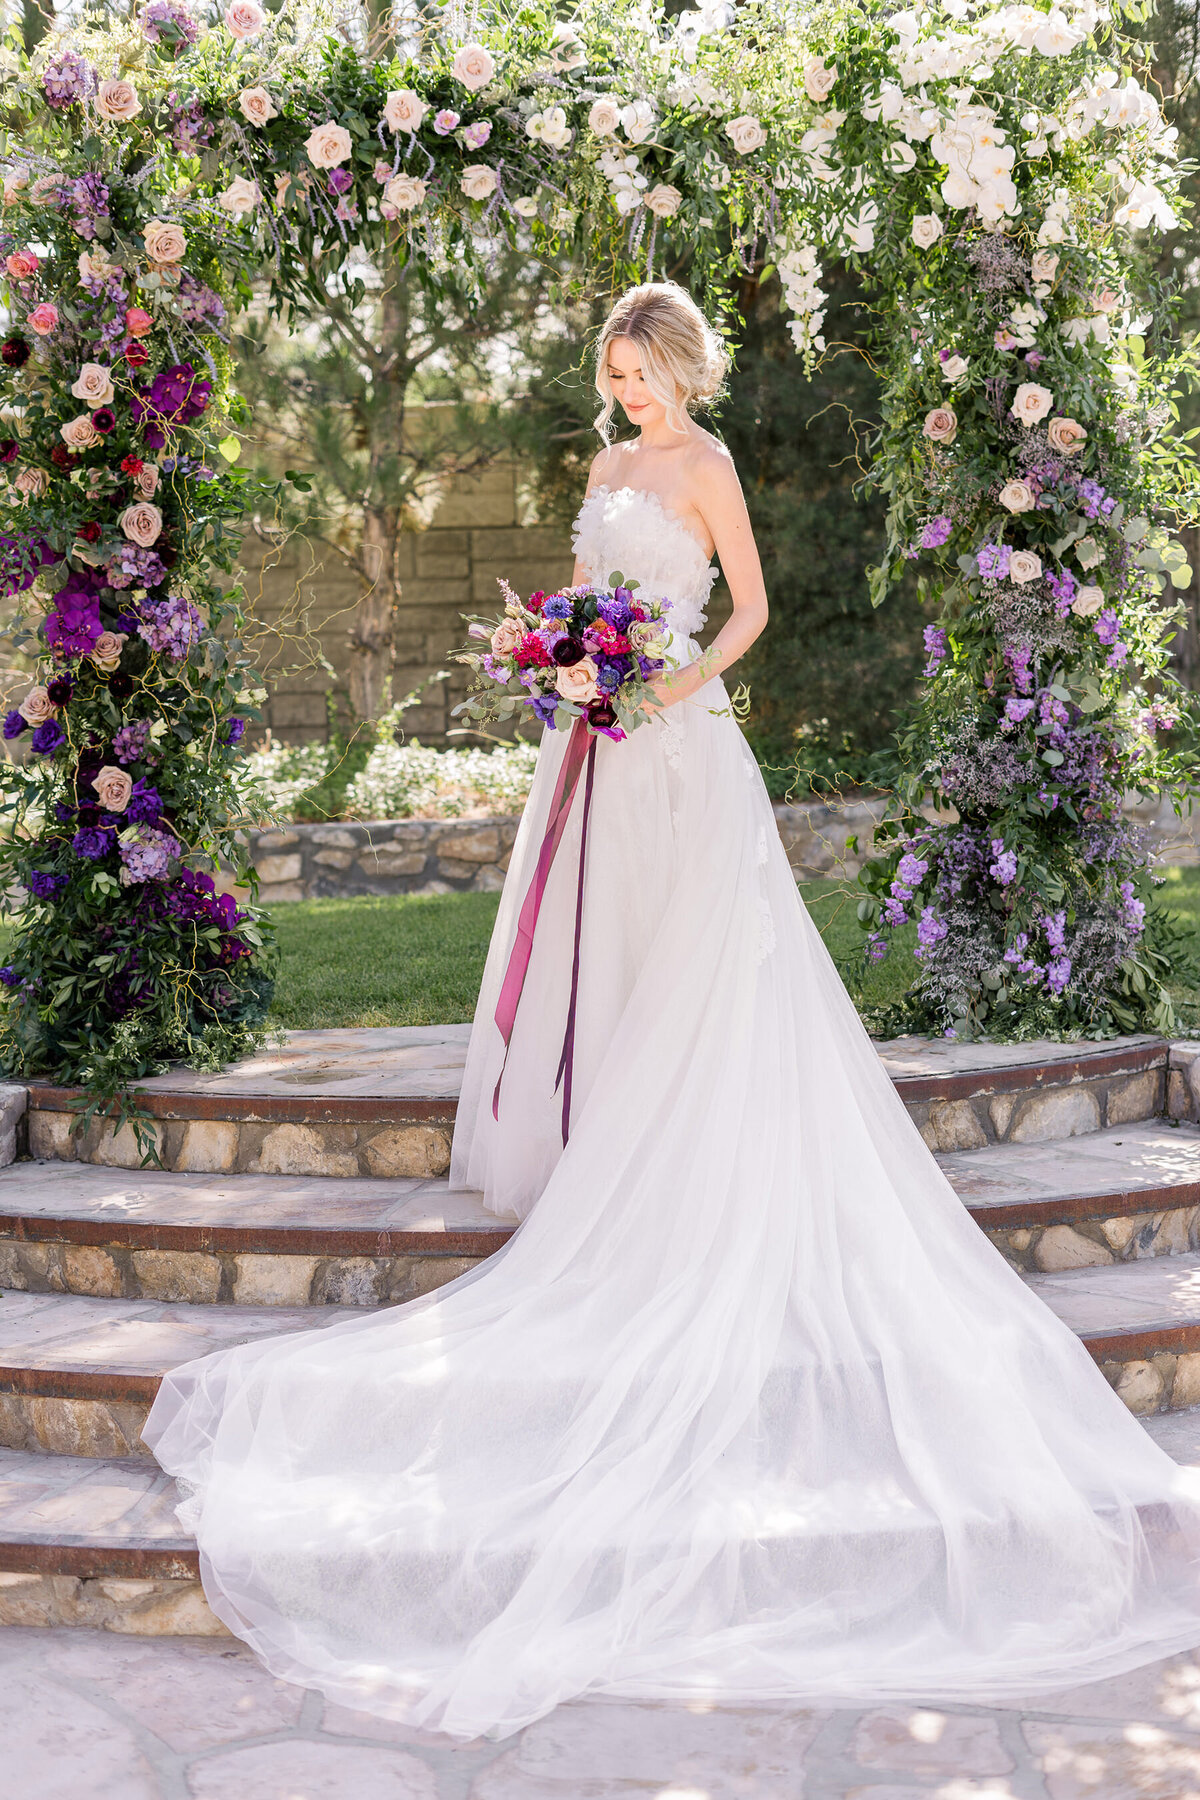 SSAA-Romantic-Shades-of-Purple-Wadley-Farms-Wedding-007